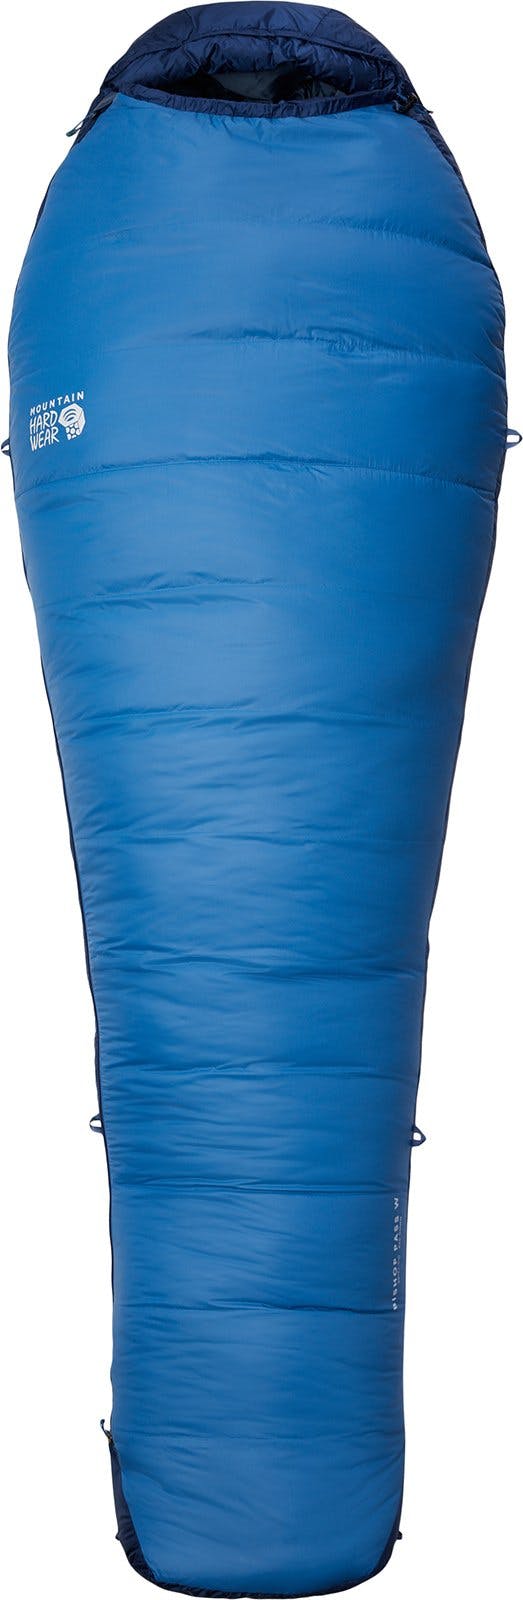 Product image for Bishop Pass 30F/-1C Regular Sleeping Bag - Women's